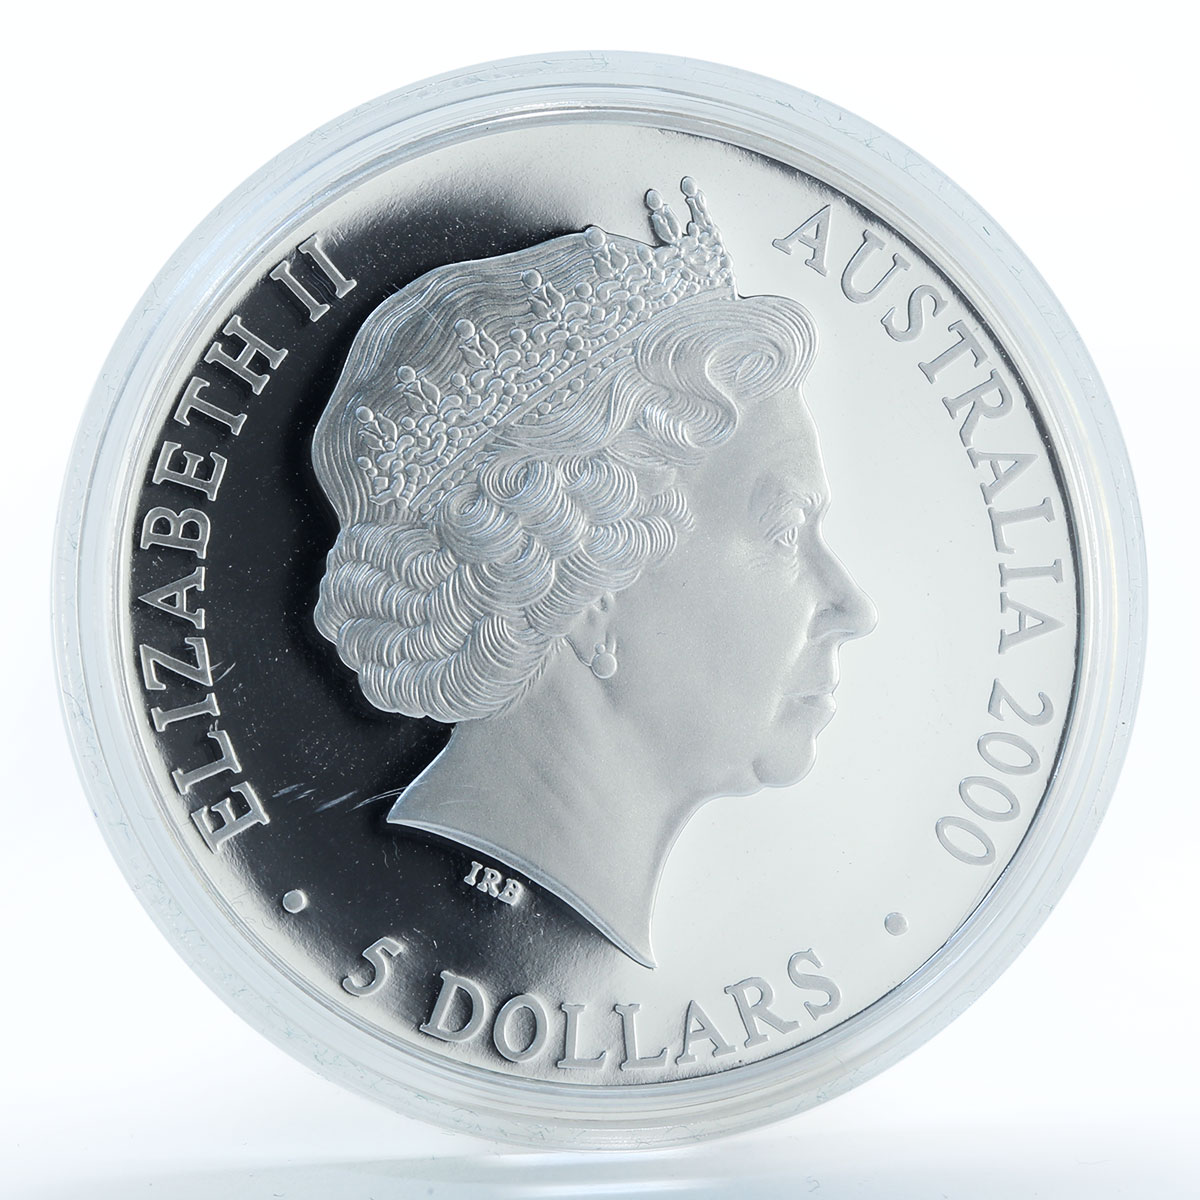 Australia 5 dollars Sydney Olympic logo at bottom silver coin 2000